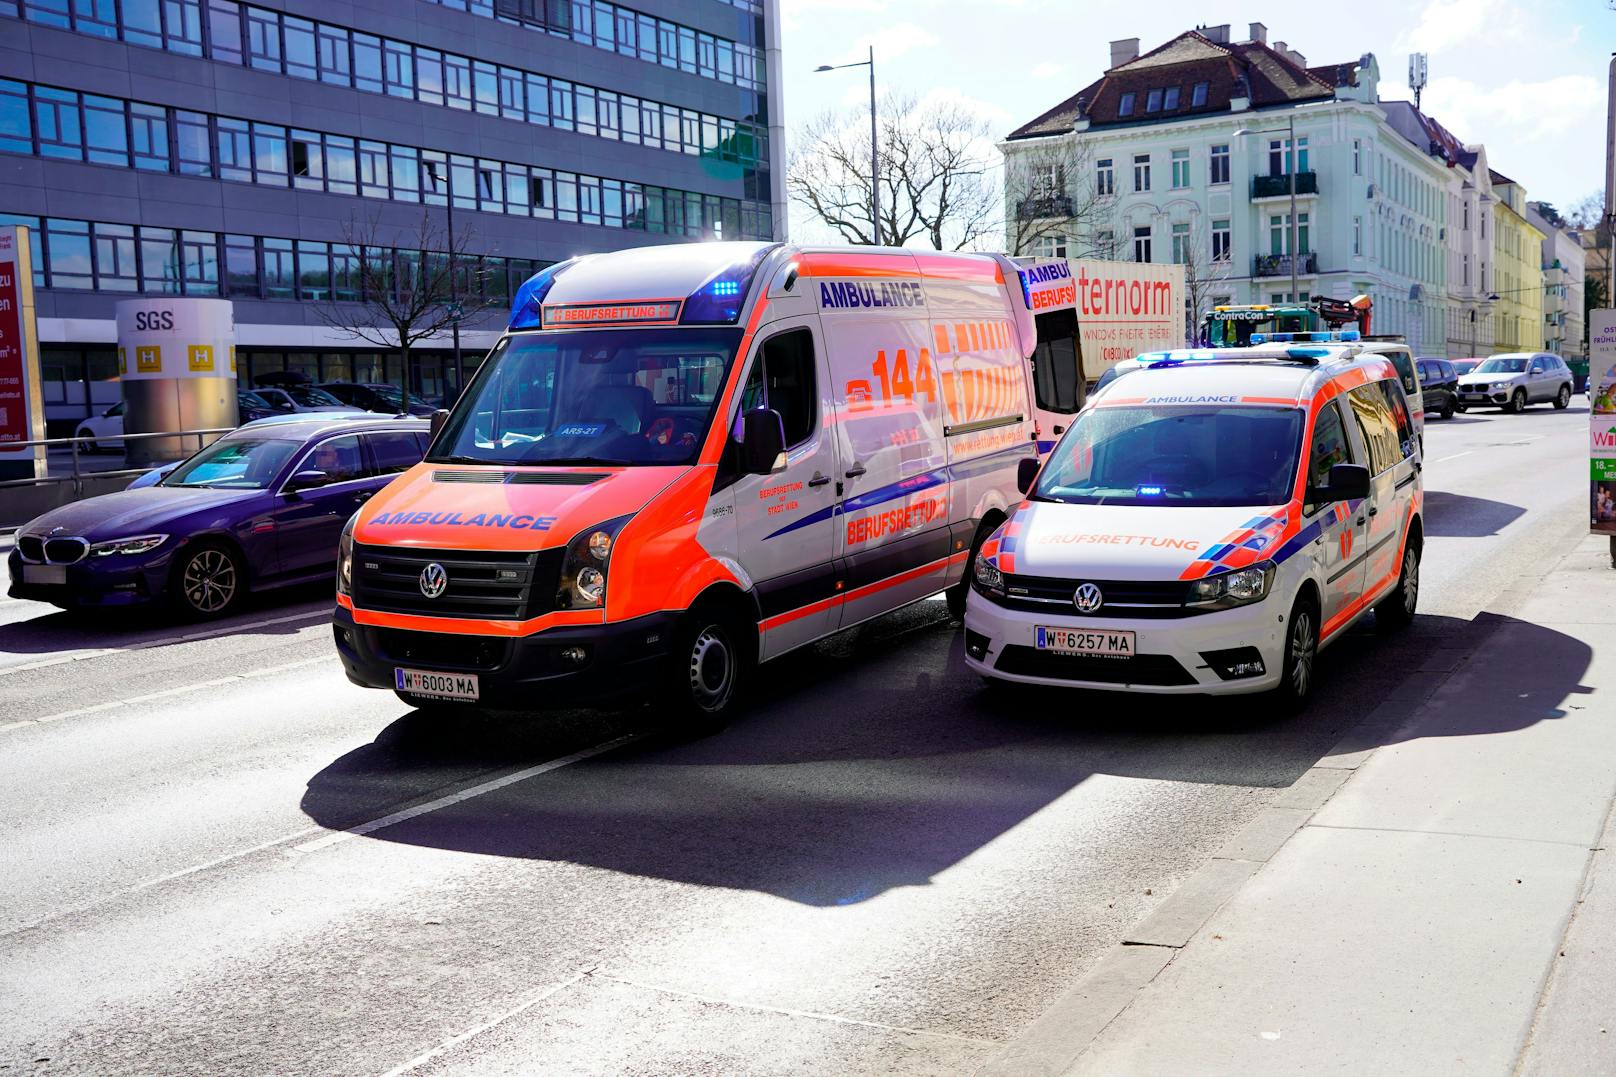 Die Berufsrettung am Unfallort in Wien-Meidling